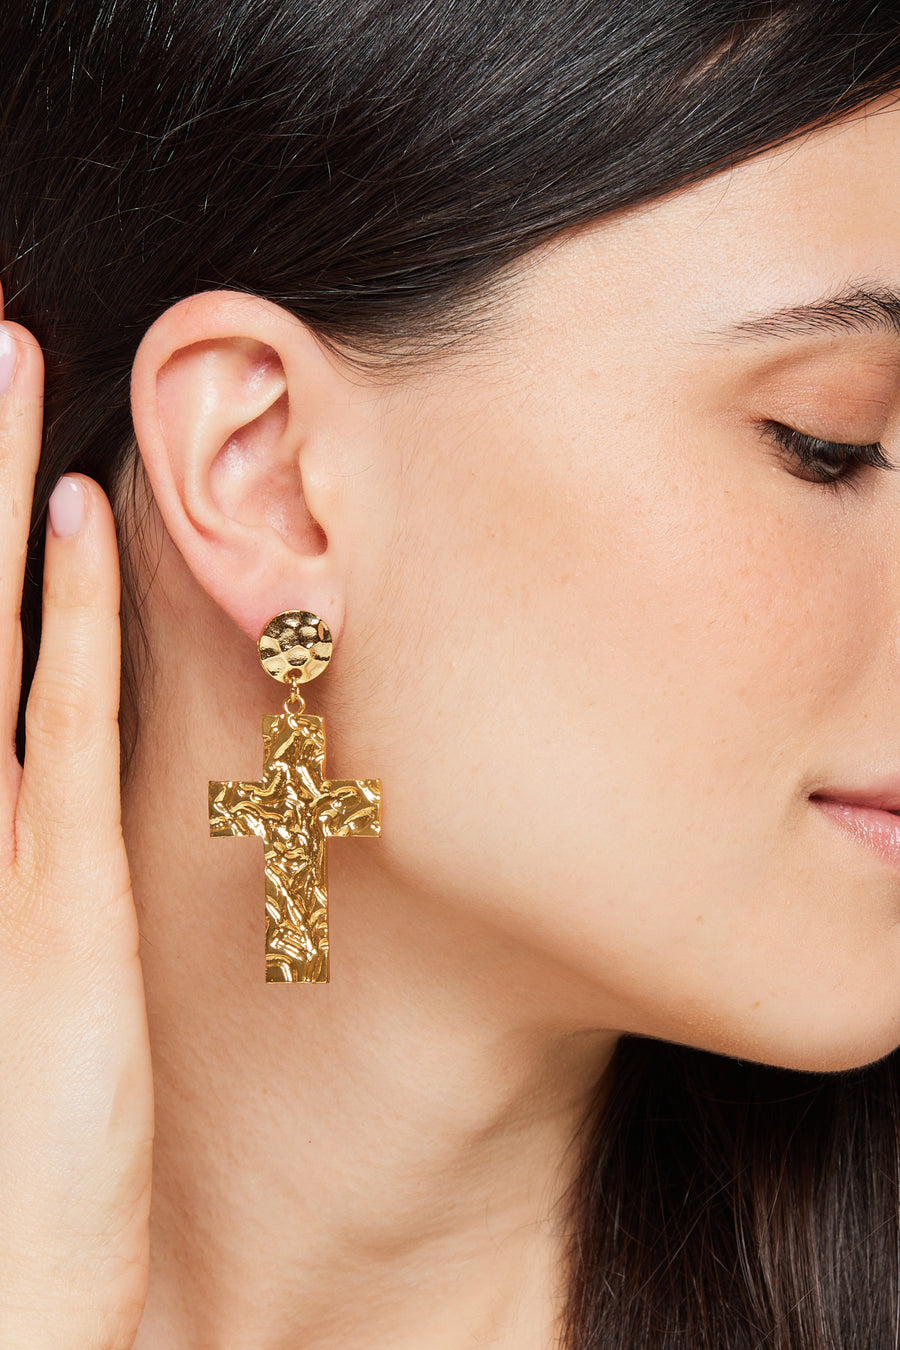 Ave Maria earrings